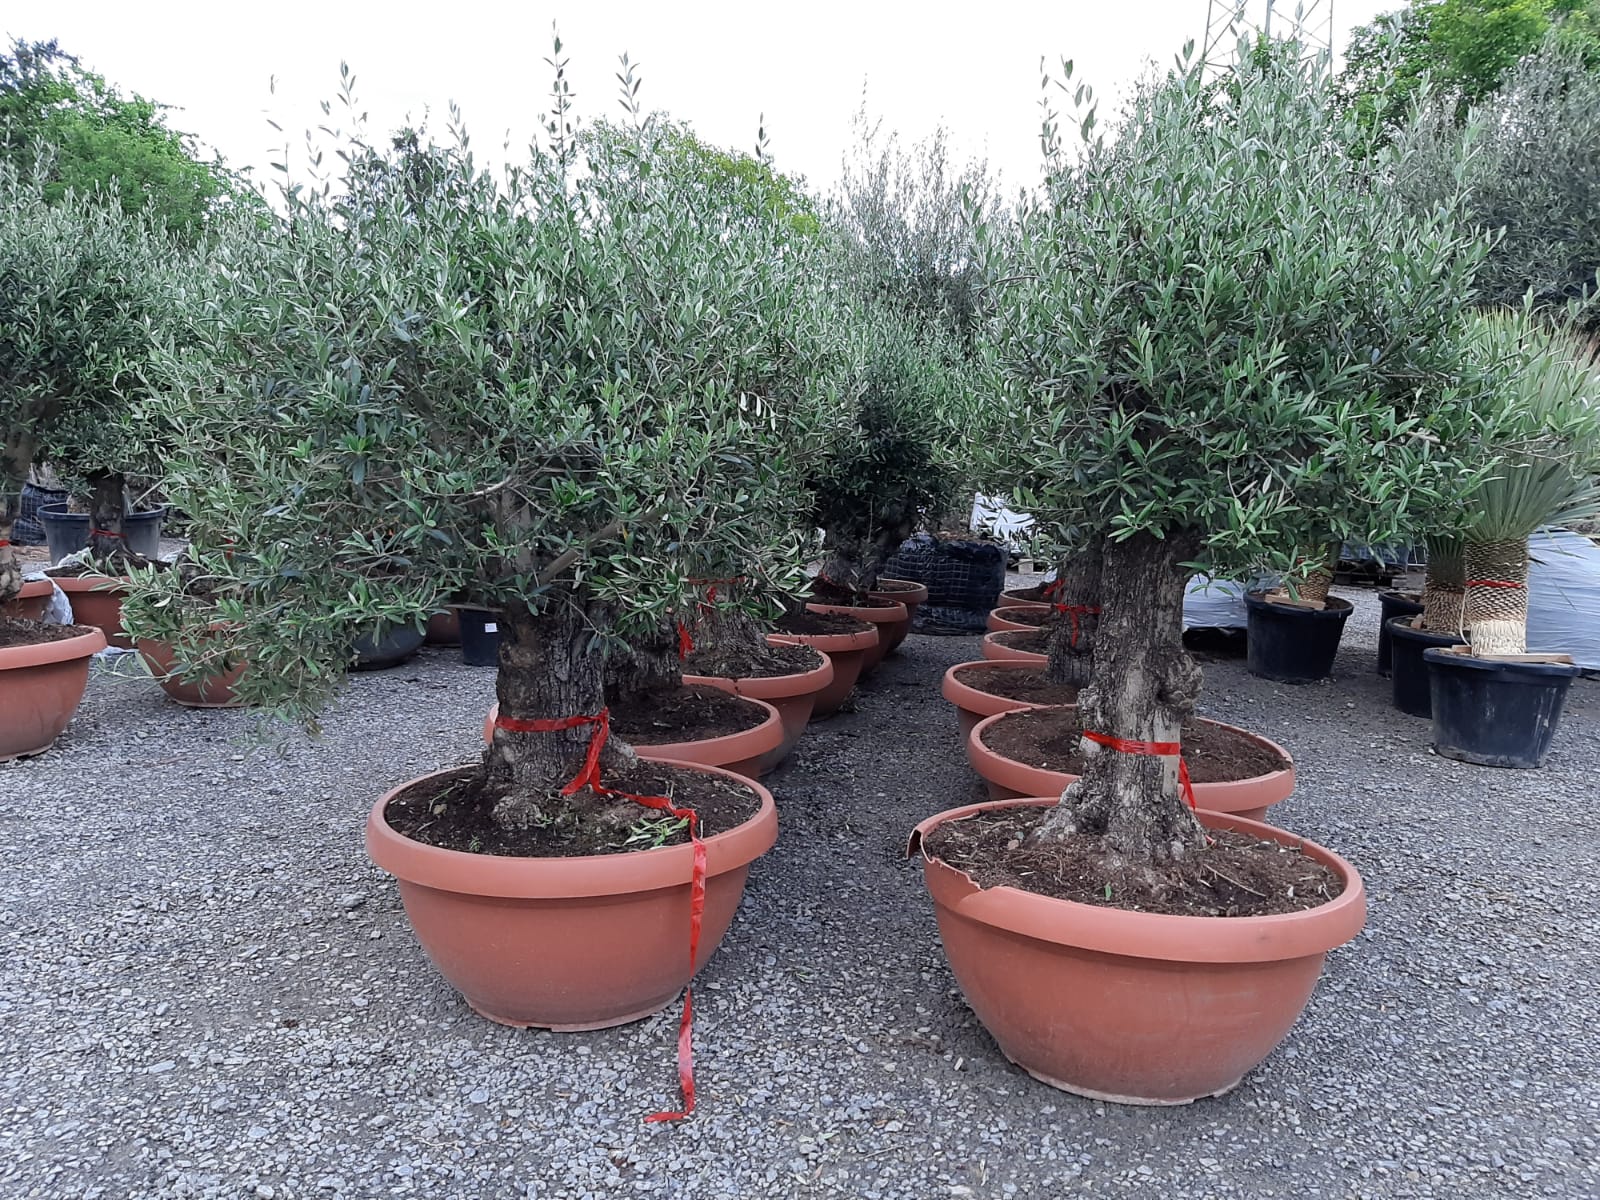 Olivenbaum Bonsai 100 Jahre Alt Winterhart bis -18 Höhe ca. 160 cm Olea Europaea TOP ANGEBOT!!!